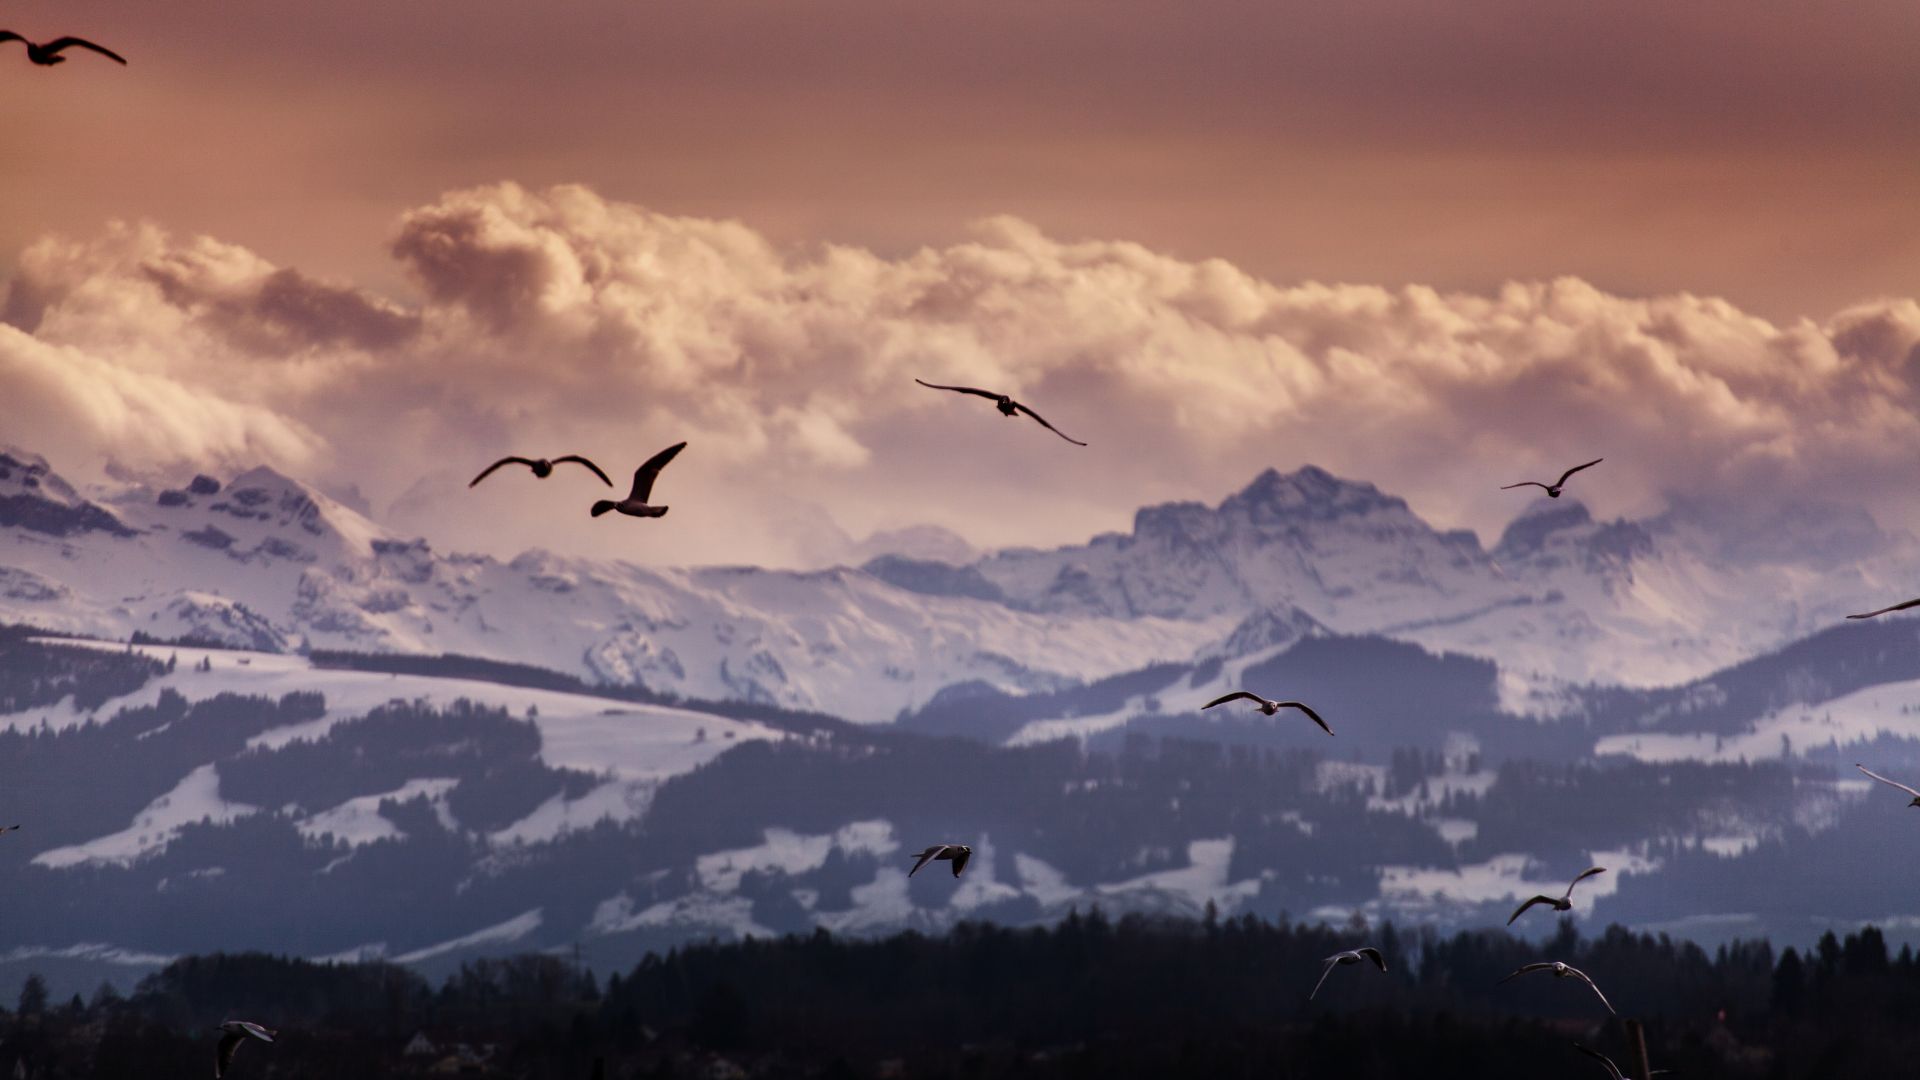 Швейцария, 5k, 4k, 8k, Альпы, горы, чайки, облака, Switzerland, 5k, 4k wallpaper, 8k, Alps, mountains, seagulls, clouds (horizontal)